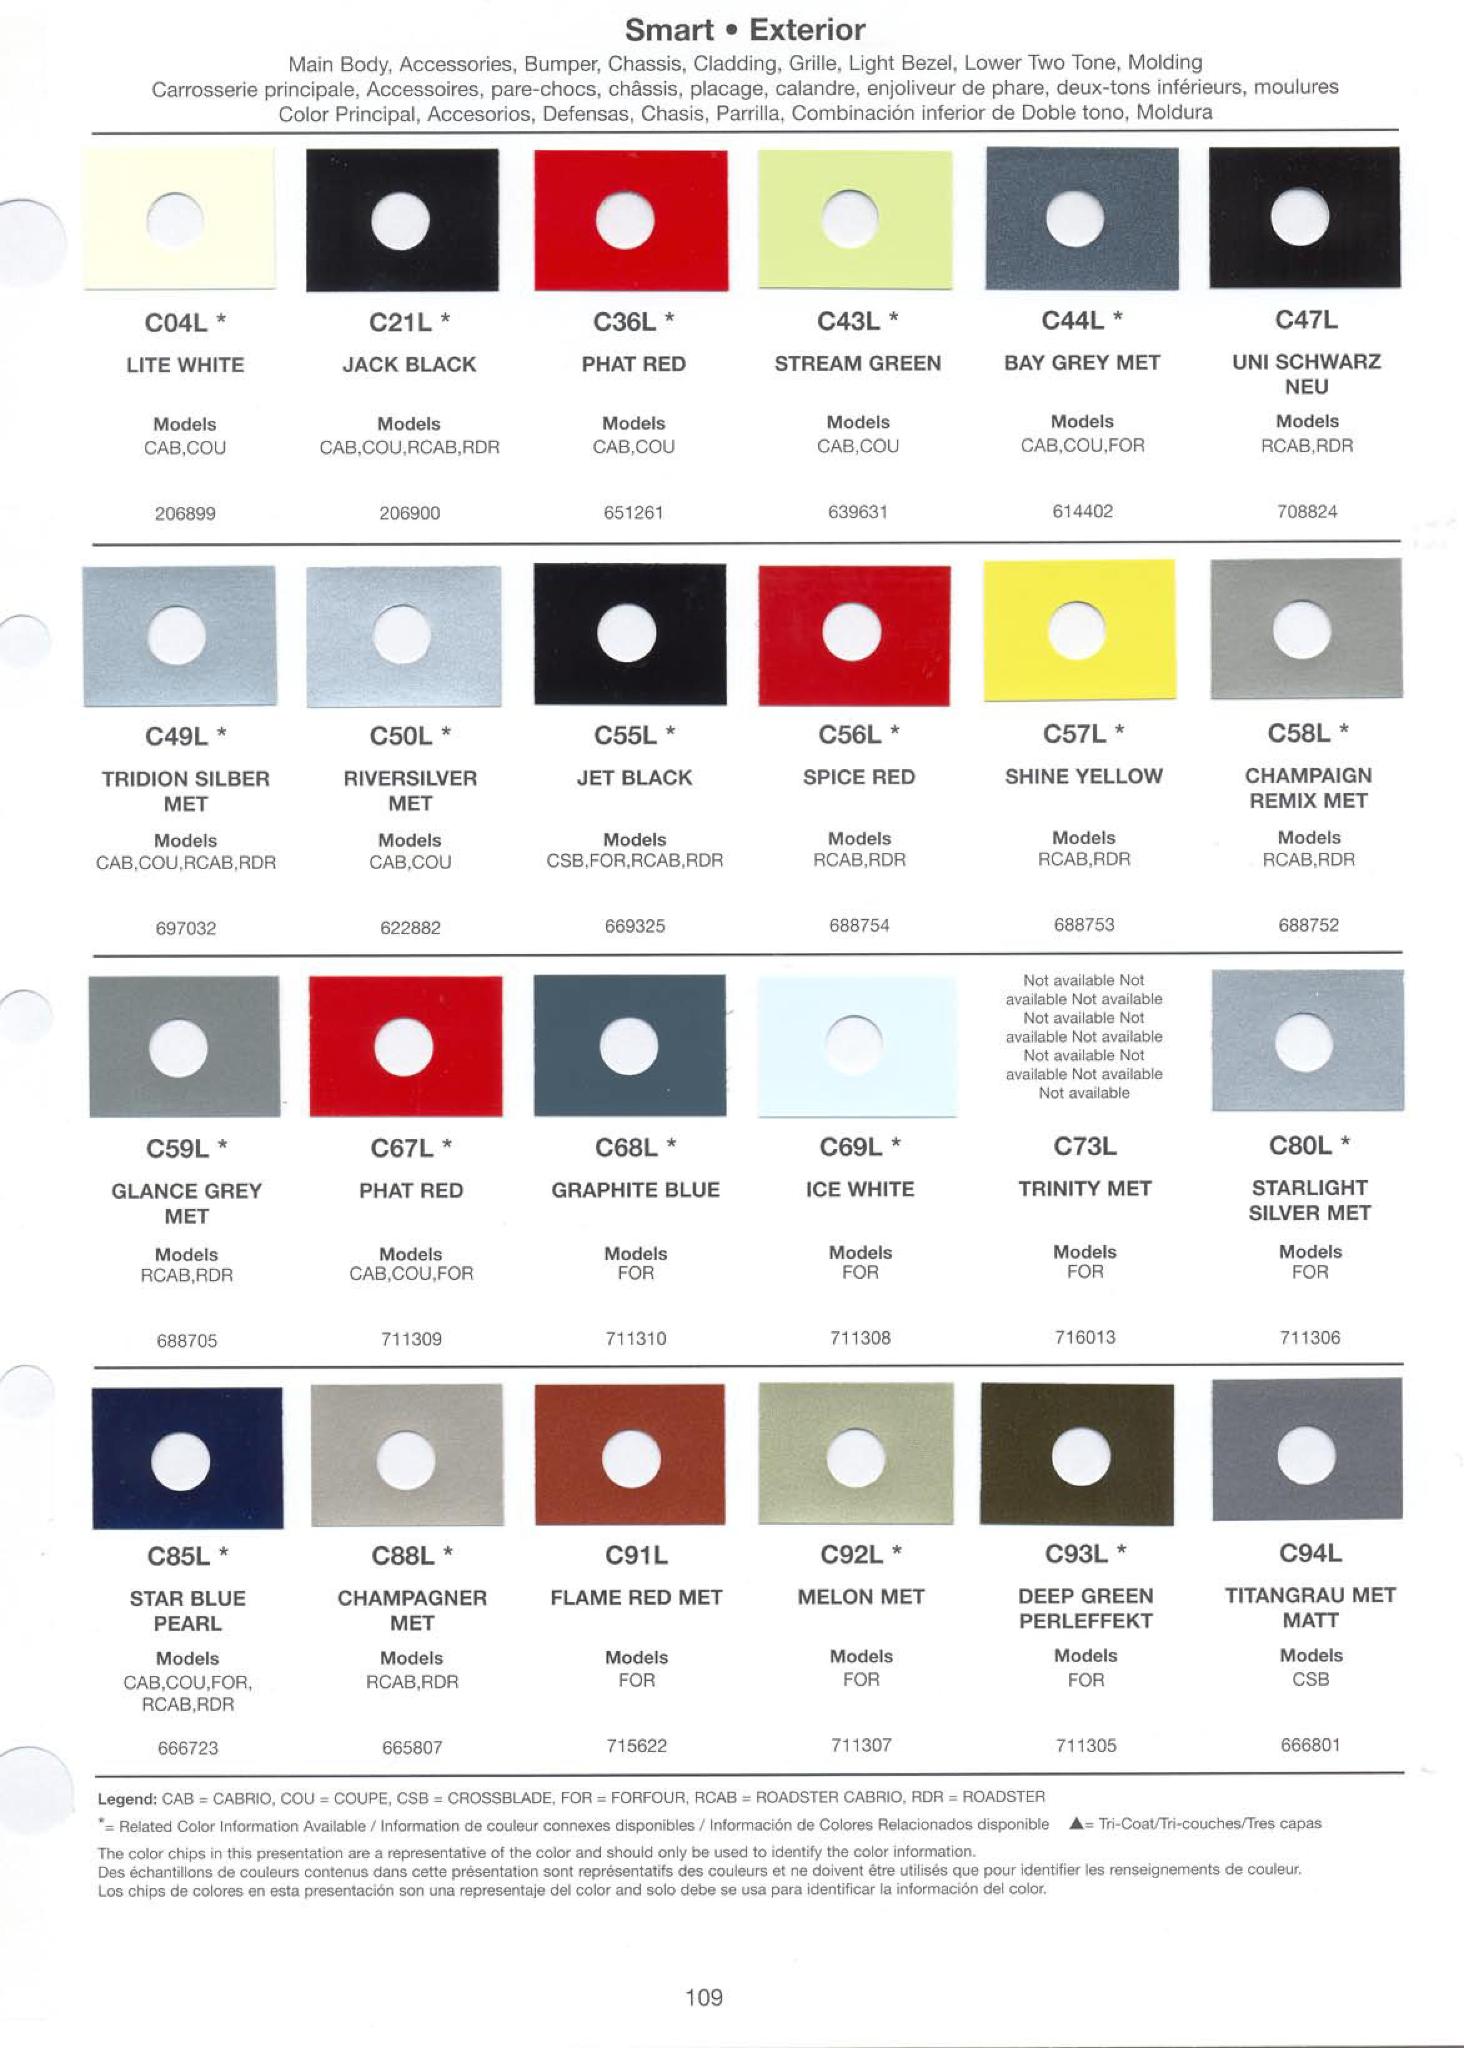 All 2005 Smart color information